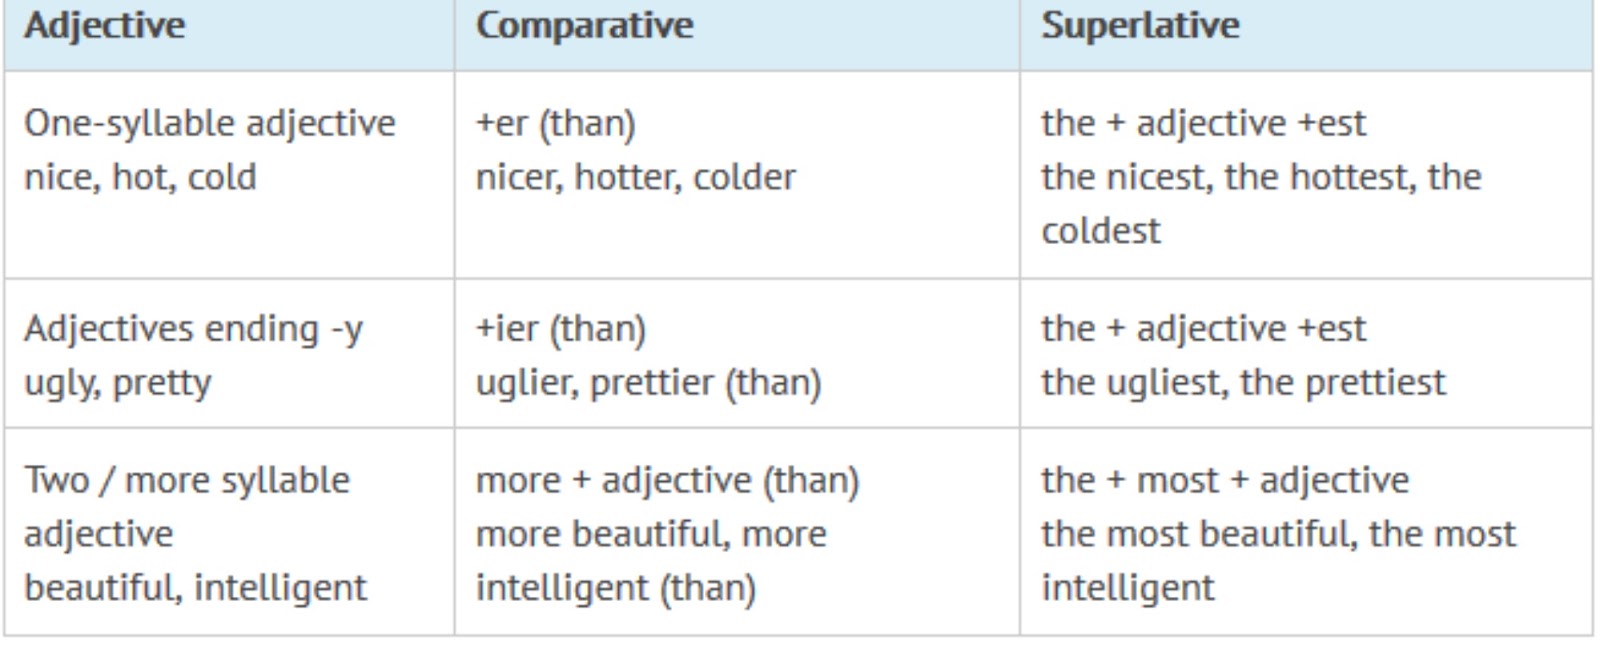 Hot comparative and superlative. Comparatives and Superlatives. Comparative and Superlative adjectives исключения. Грамматика Comparatives. Comparatives and Superlatives исключения.